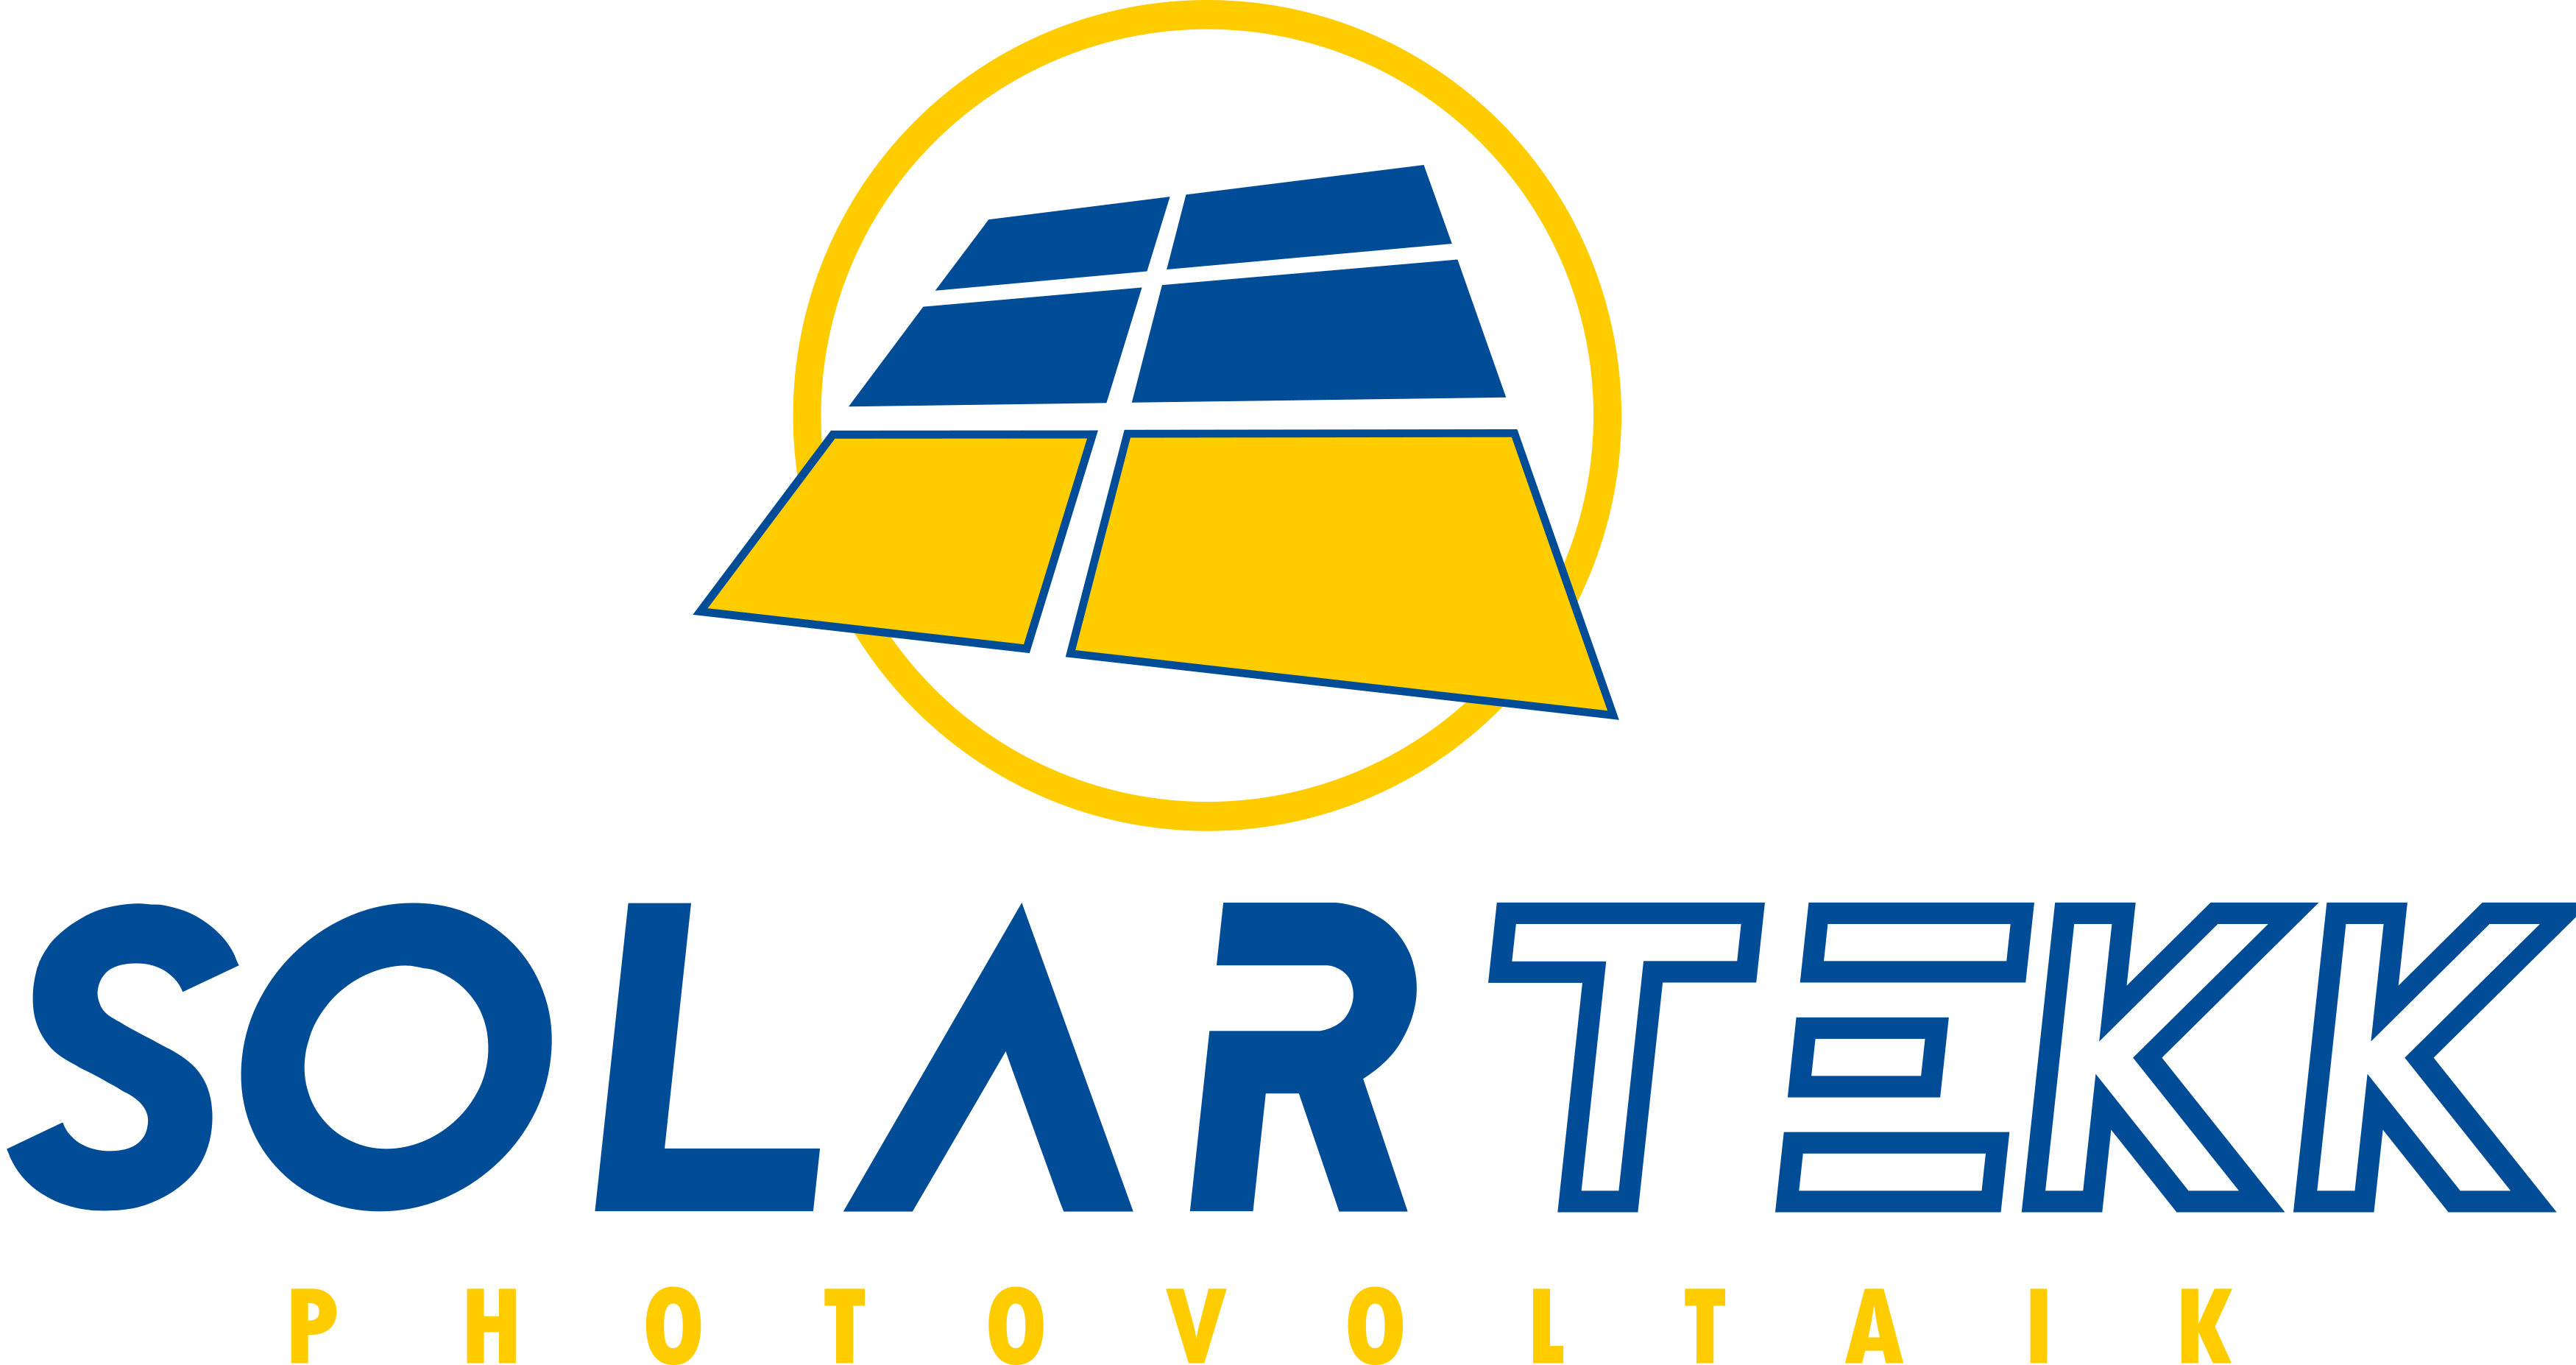 SOLARTEKK - Photovoltaik Verkauf und Beratung